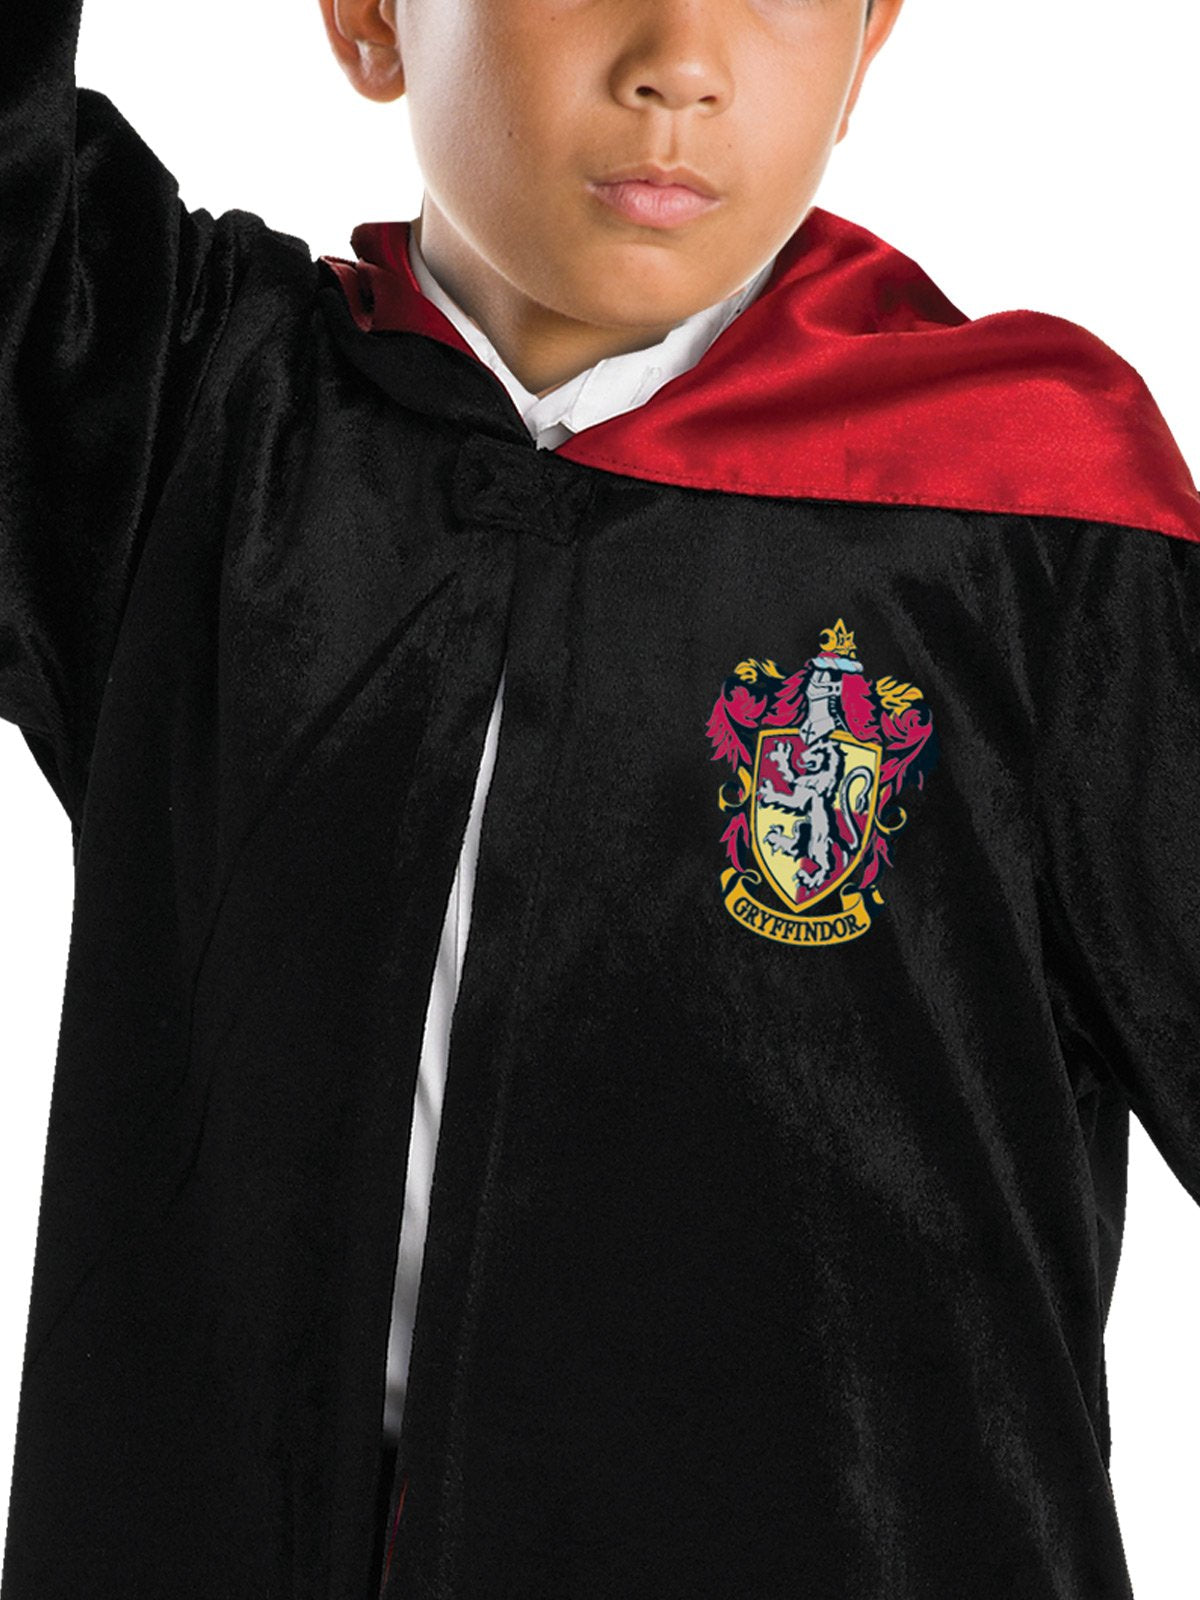 Costume Harry Potter Robe